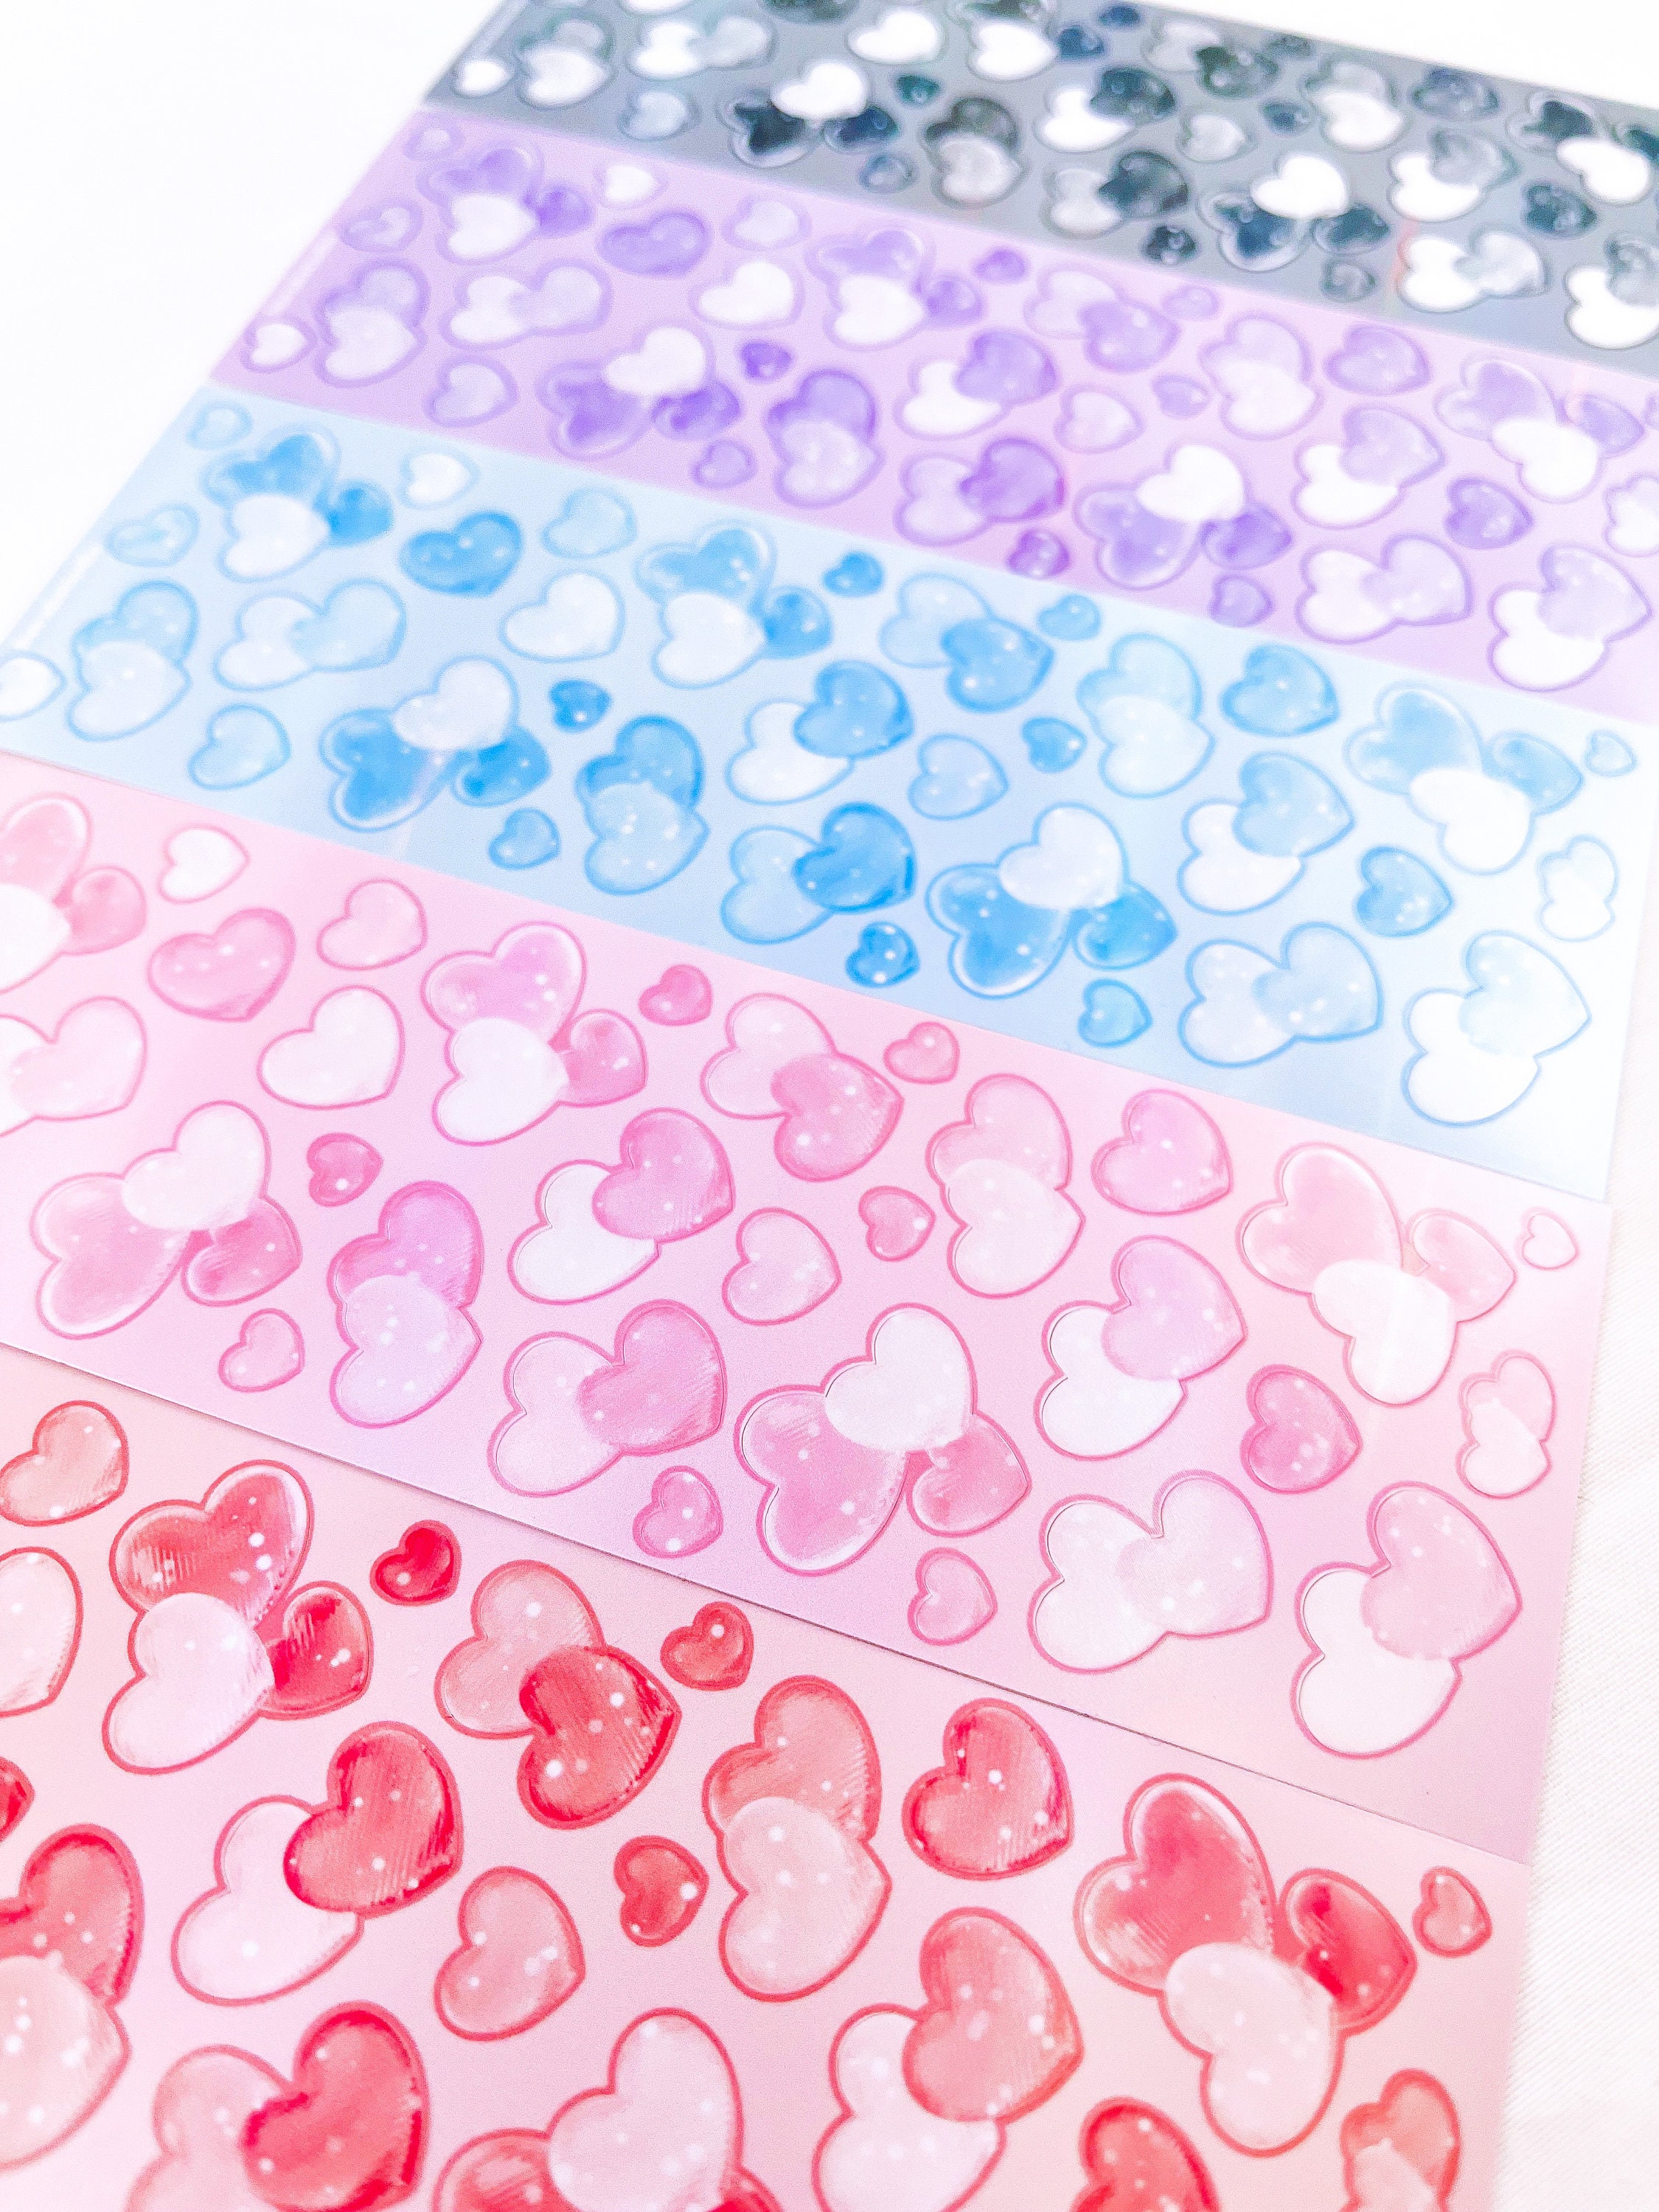 Love romantic stickers. Cute sticker for letter or diary, po